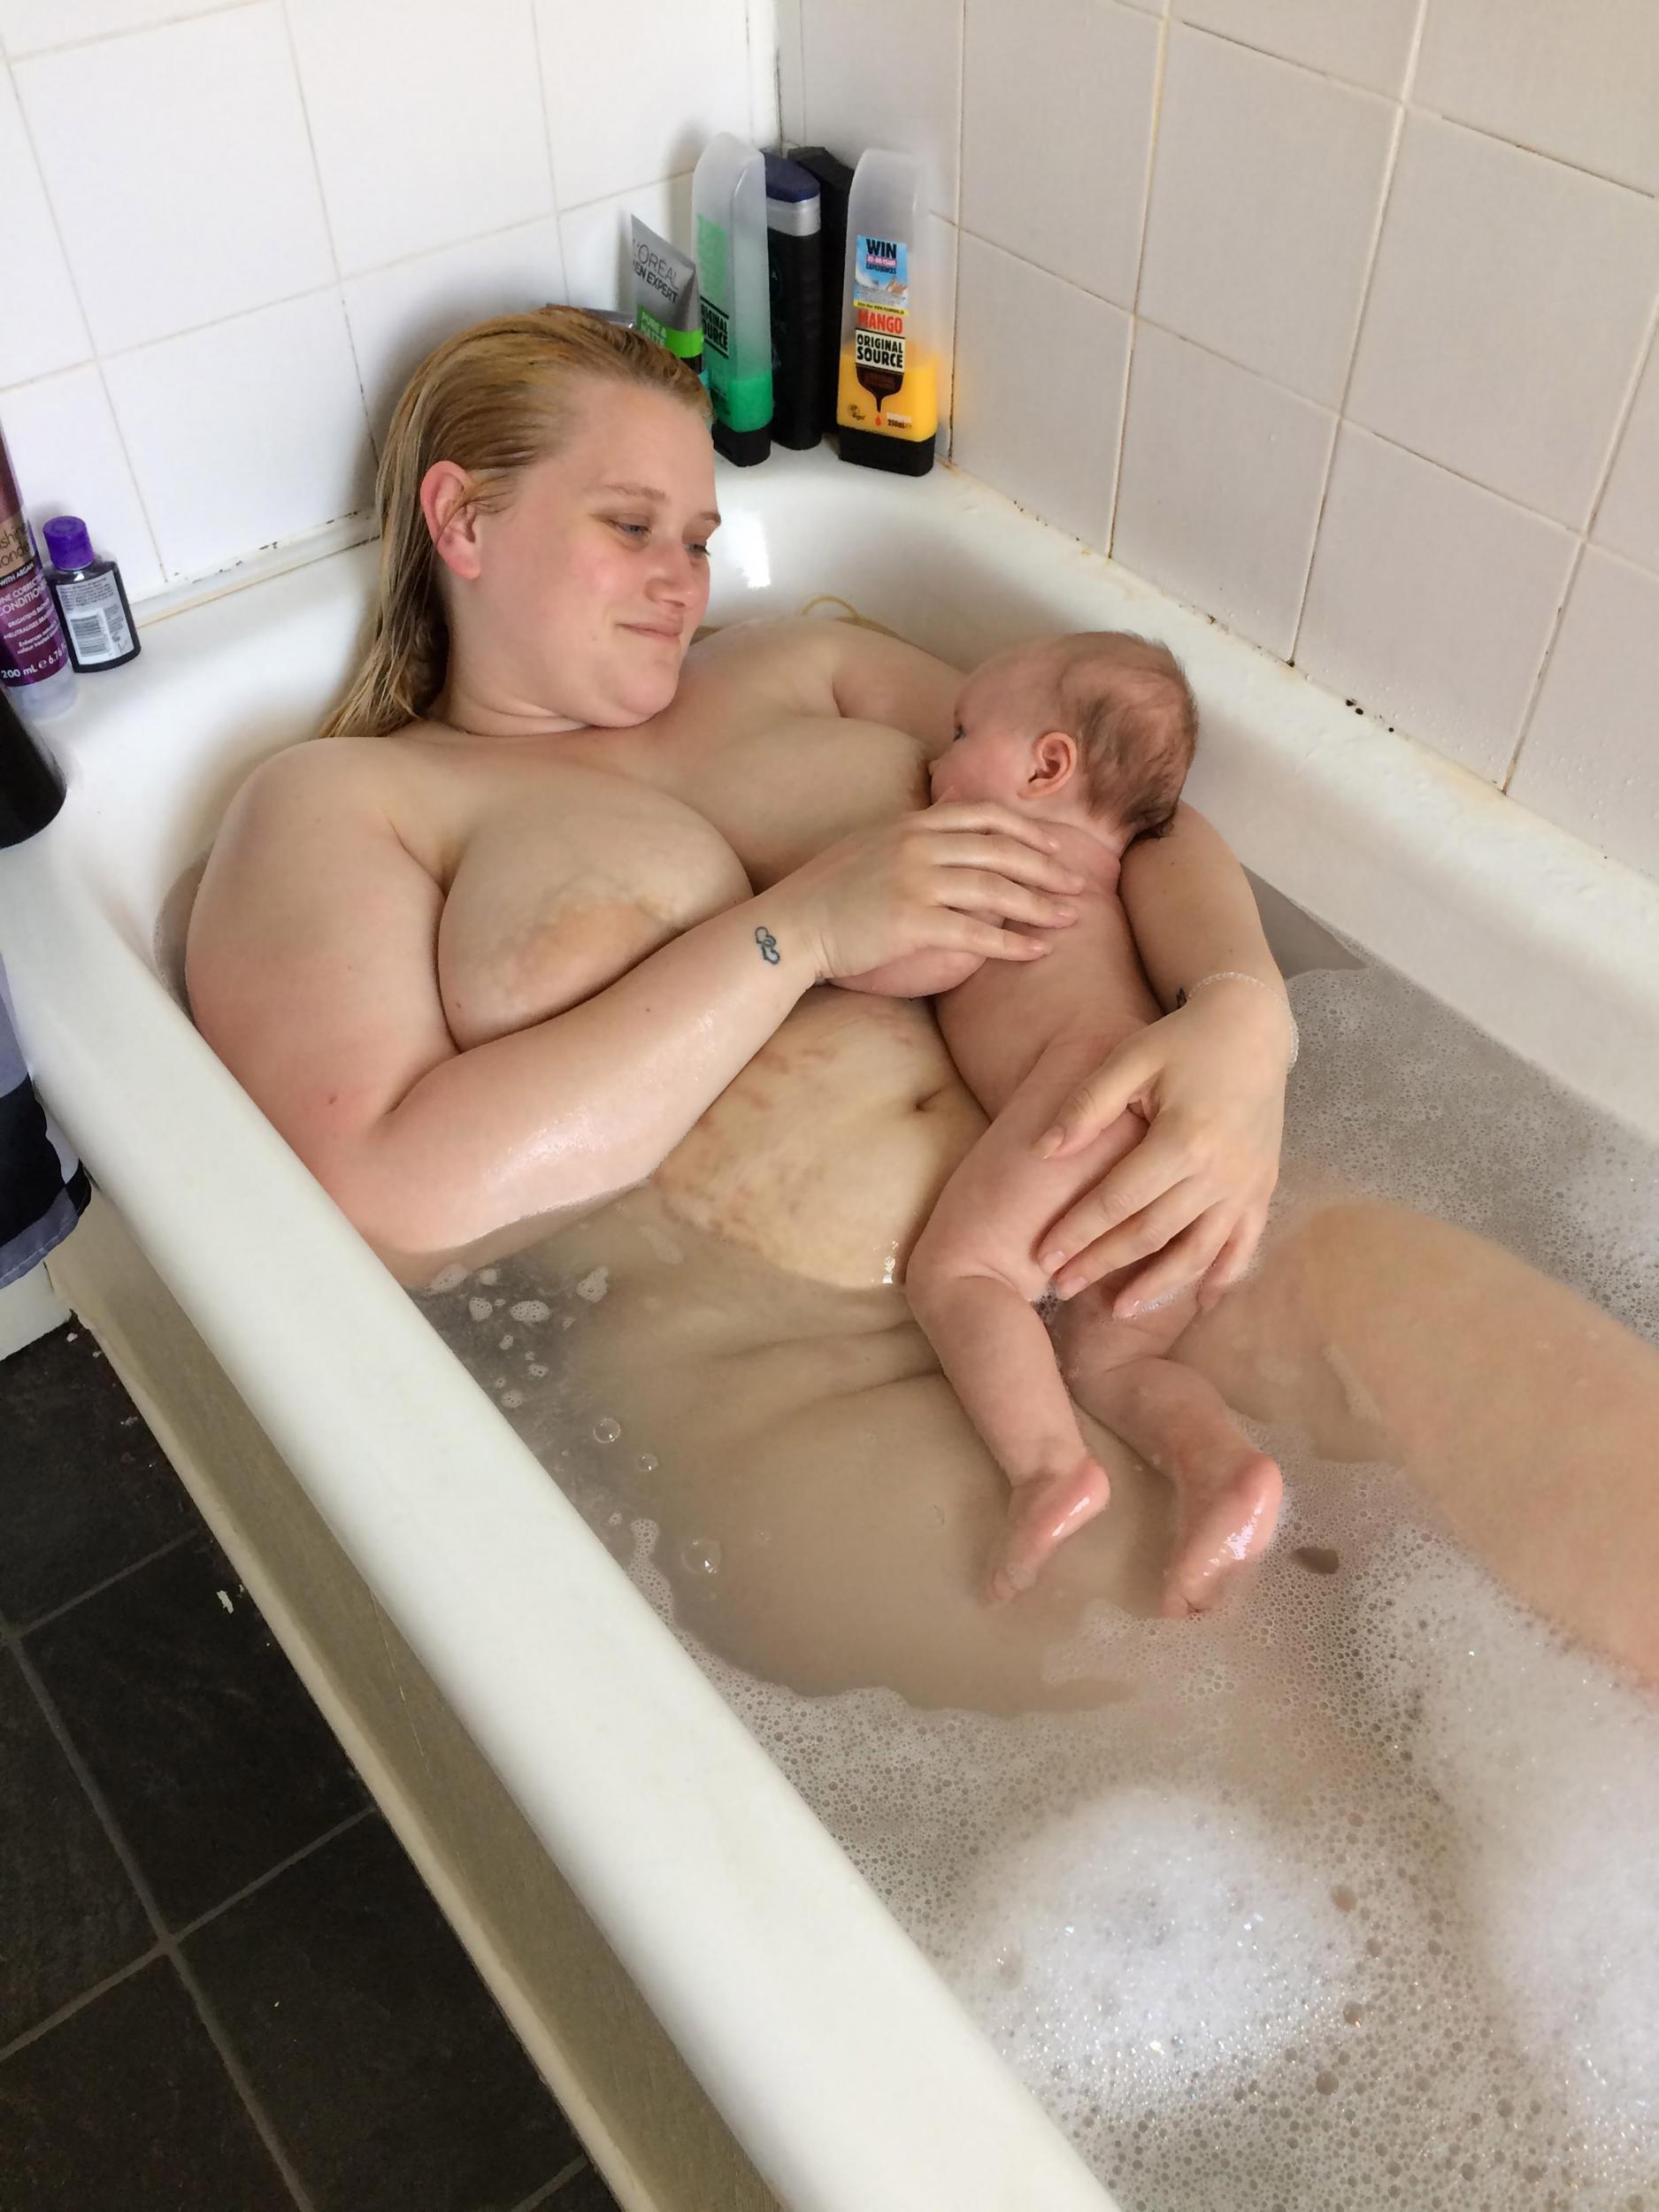 Bbw Lactating Cartoons - Woman posts naked breastfeeding photo to remind mothers ...